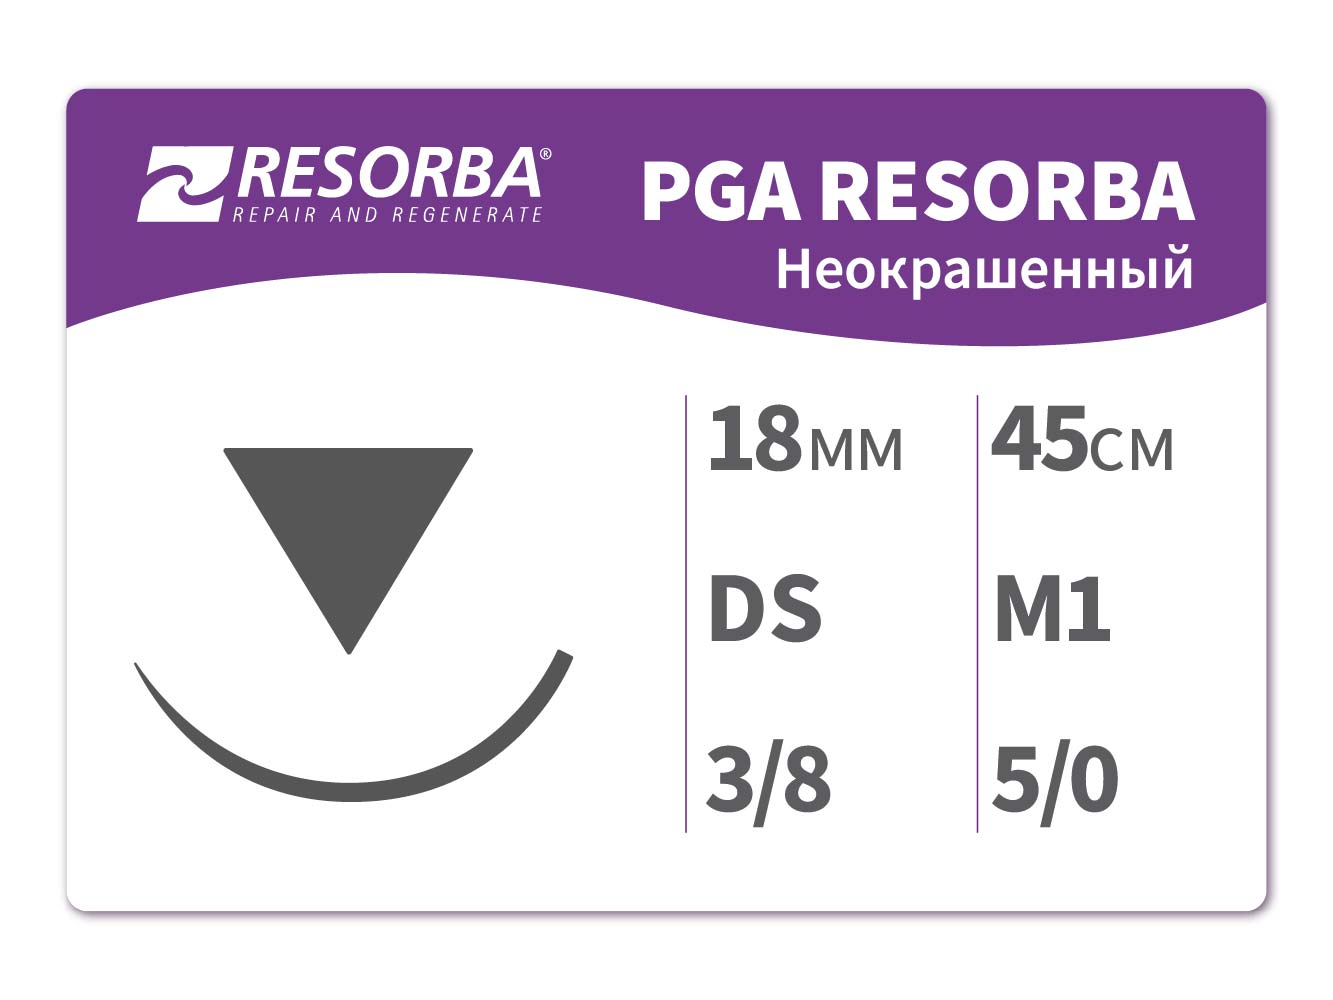 PA1140  ПГА-Ресорба DS 18. 1EP 5-0 USP. 0/45 м, неокрашенная, RESORBA (Германия)